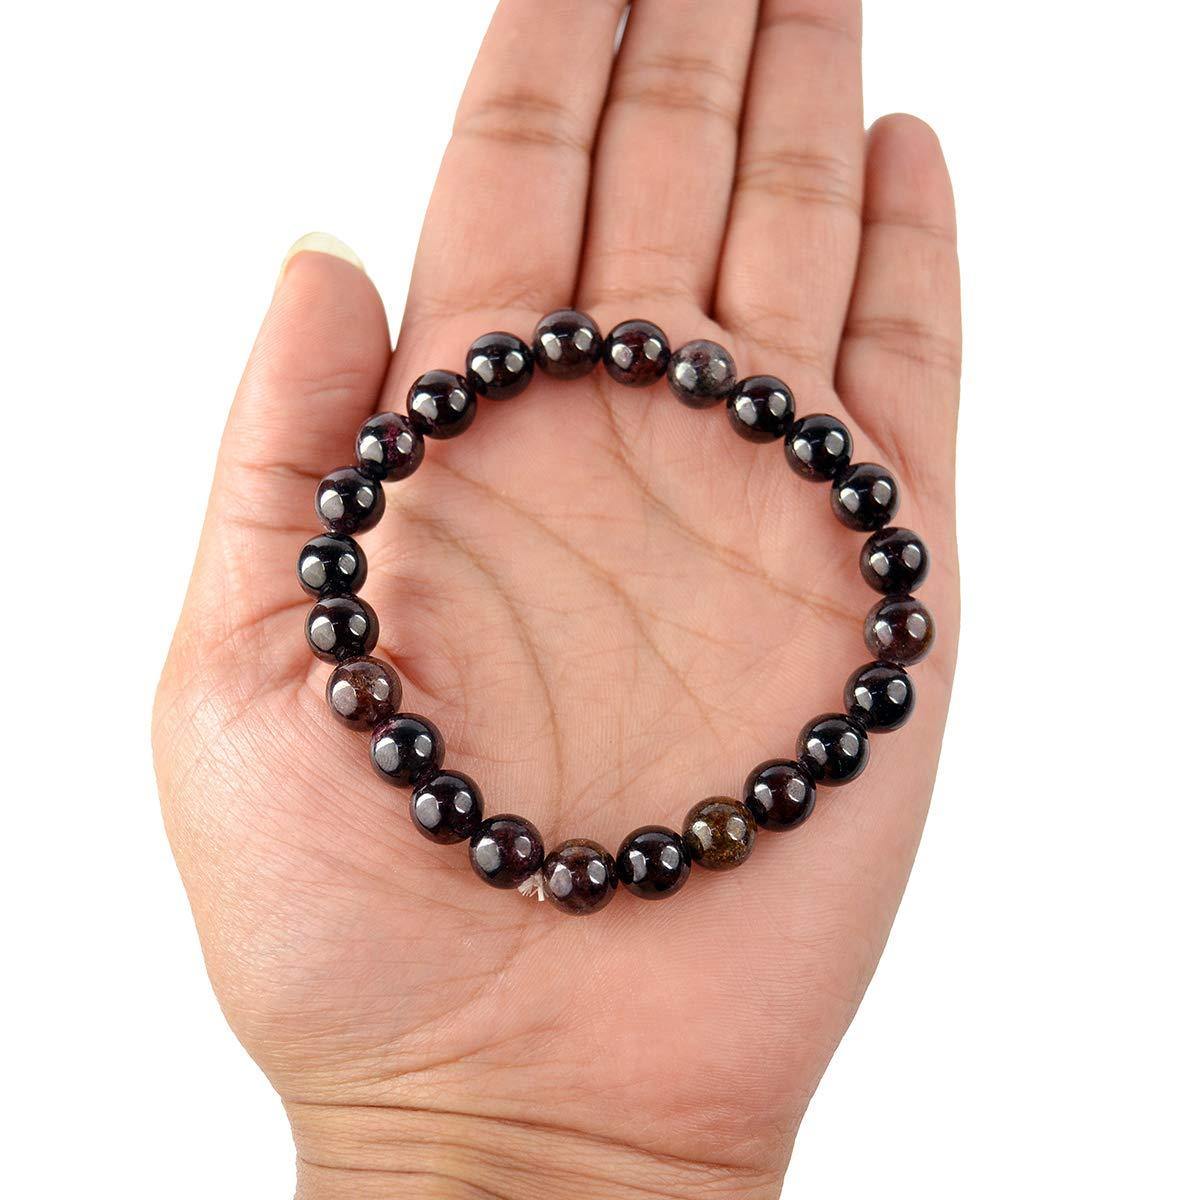 Healing Crystals - Wholesale Garnet Bracelet